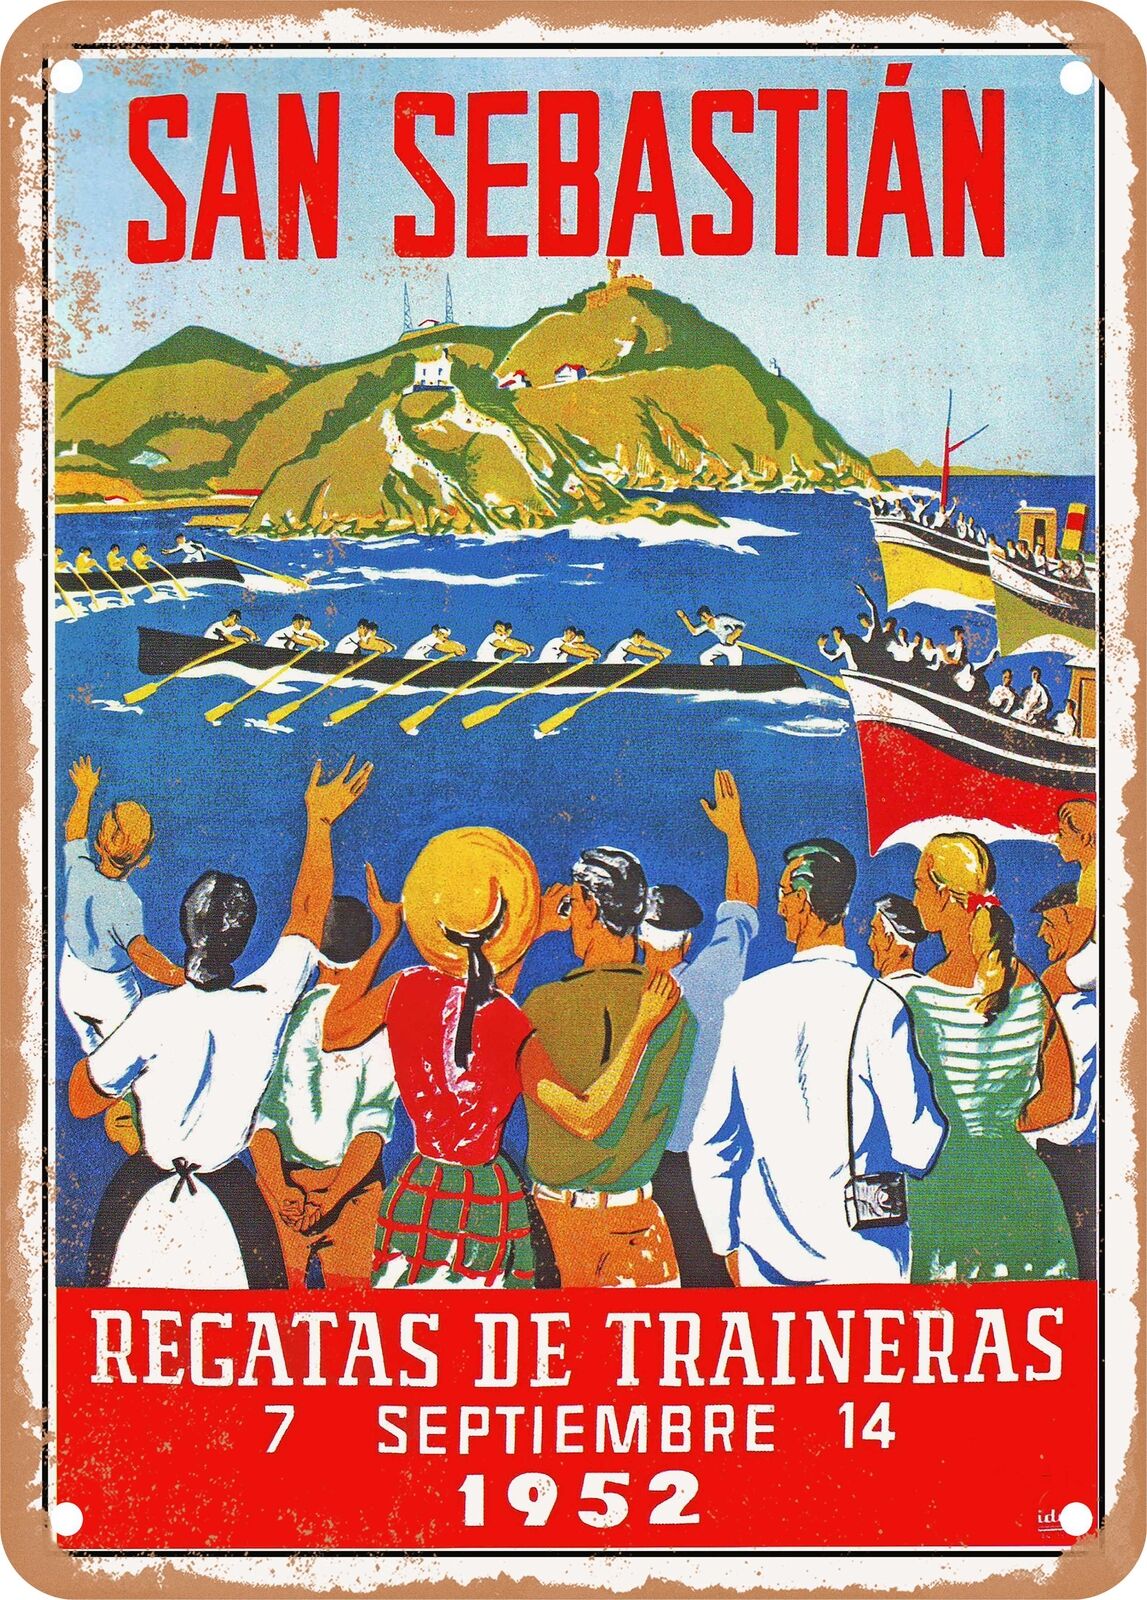 METAL SIGN - 1952 San Sebastian Trainera Regattas Vintage Ad